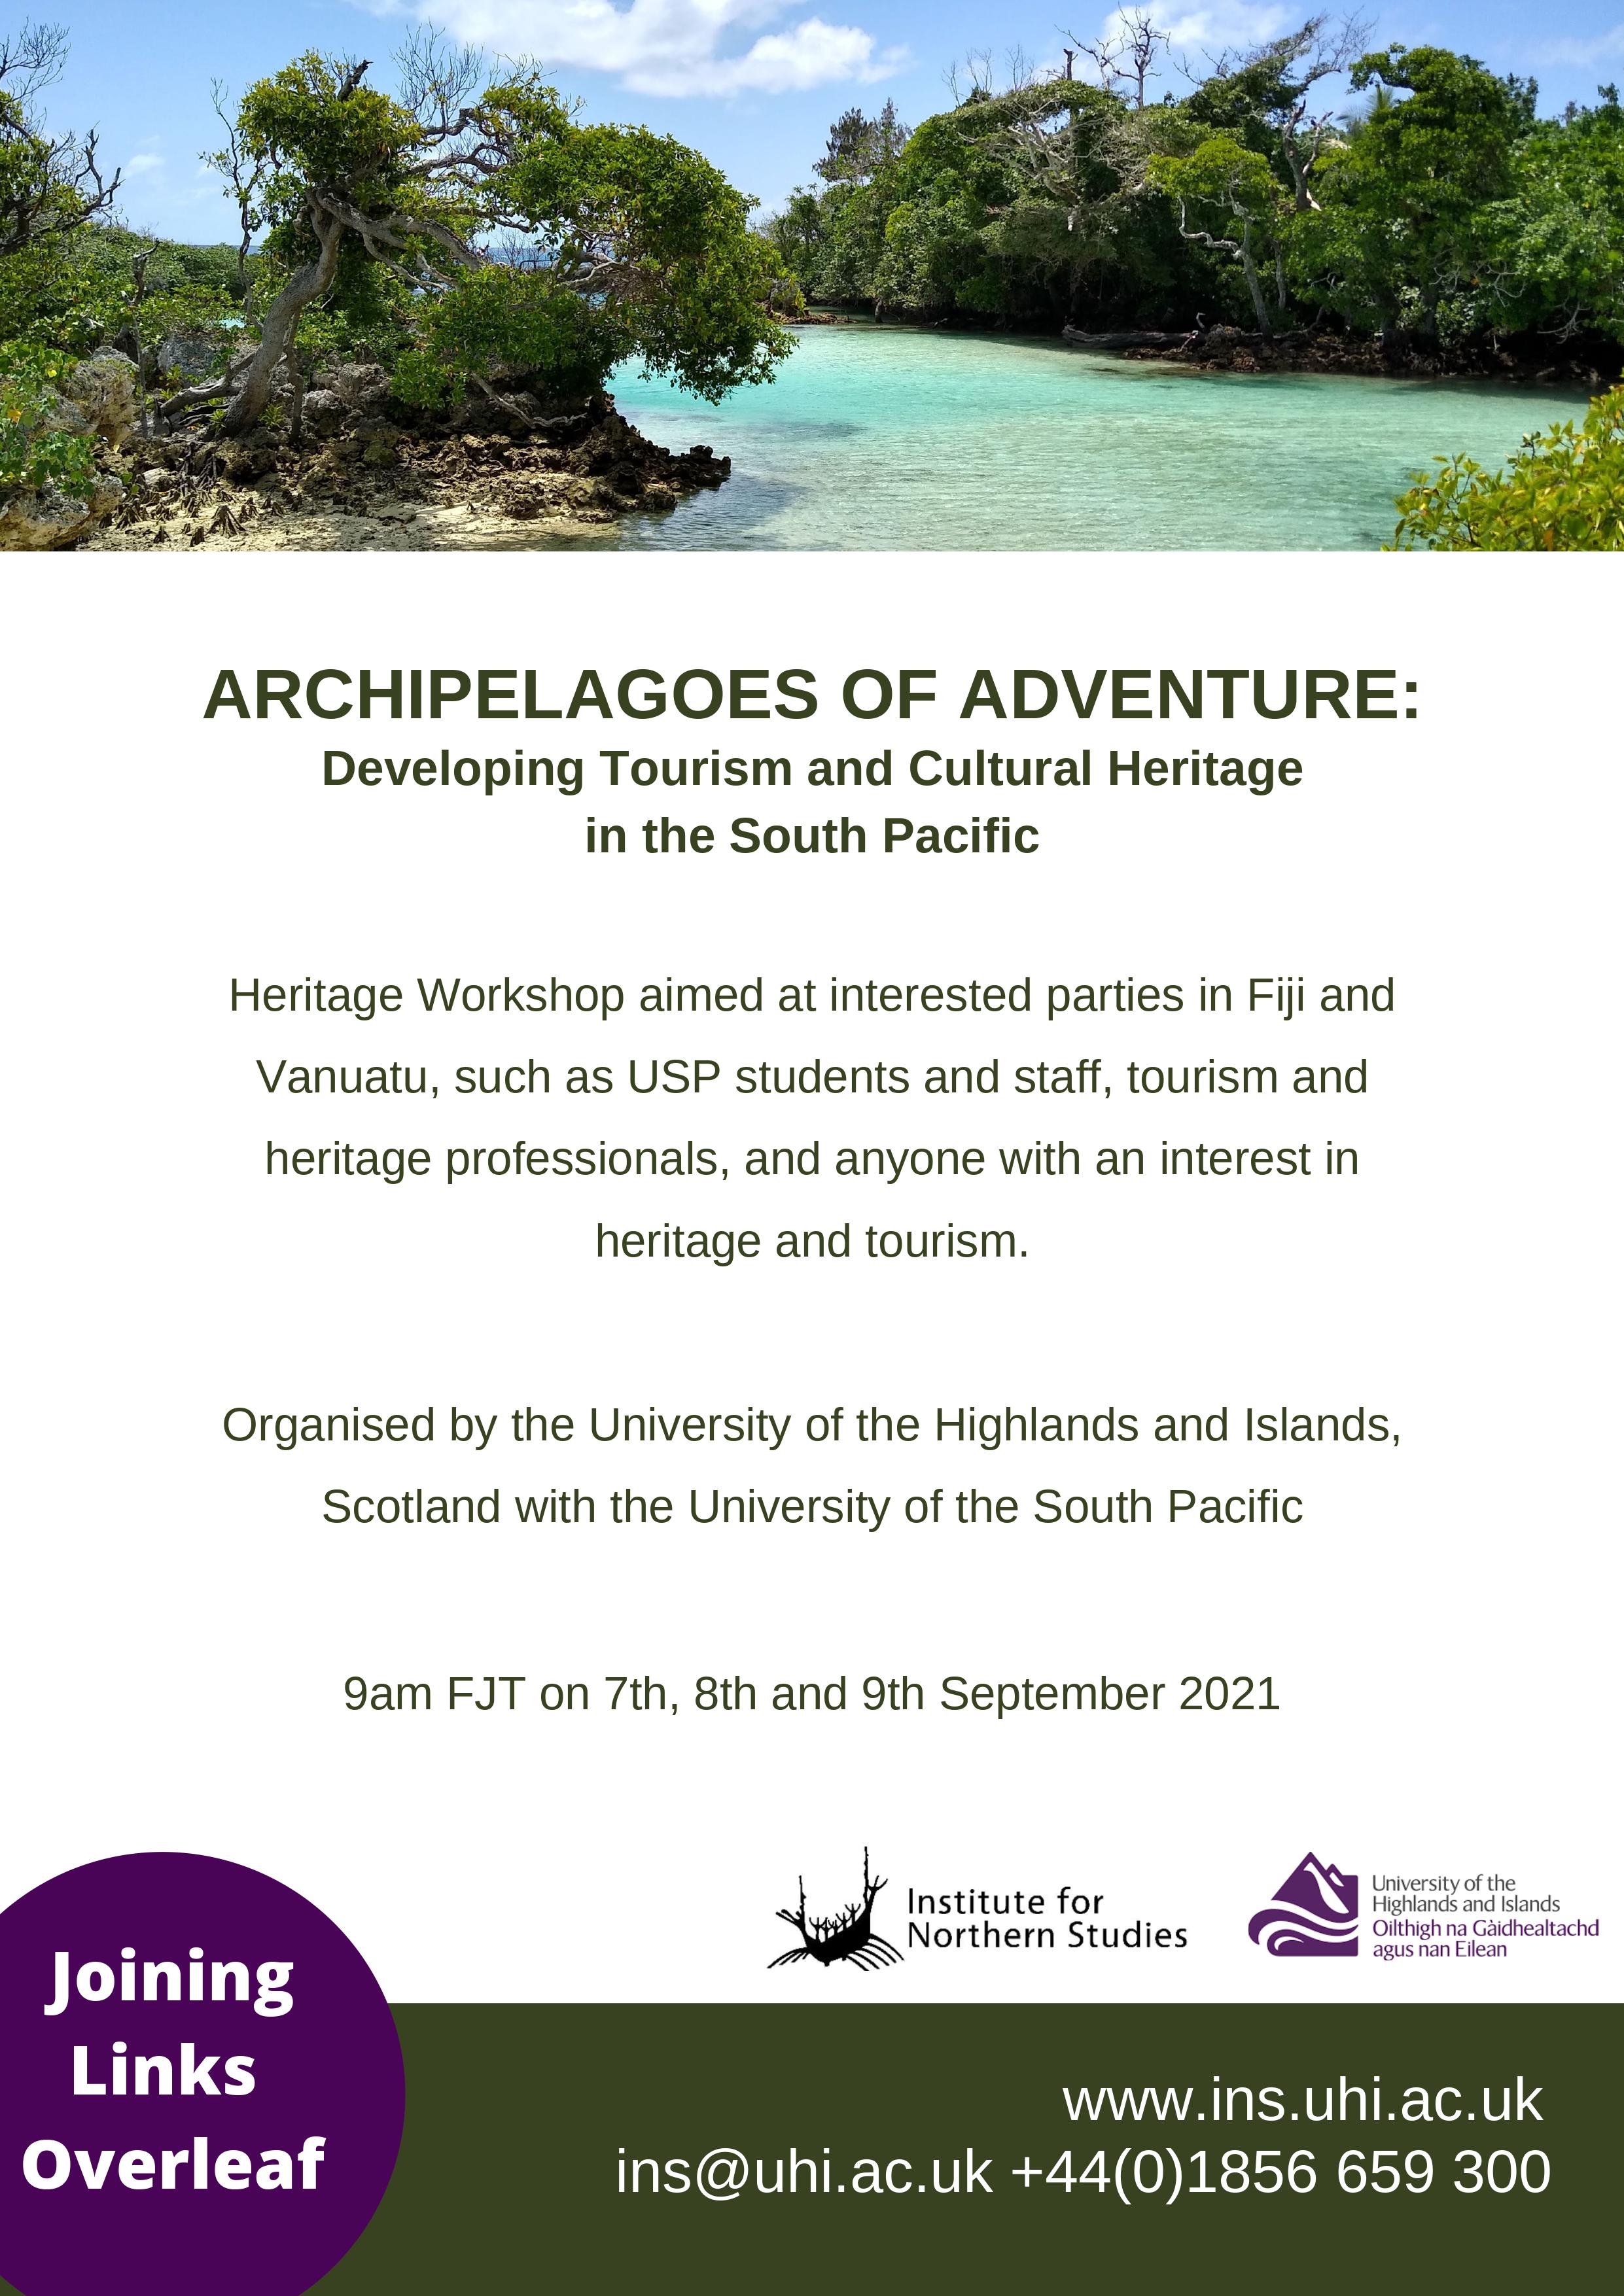 Tourism and Heritage Workshops in Fiji and Vanuatu 